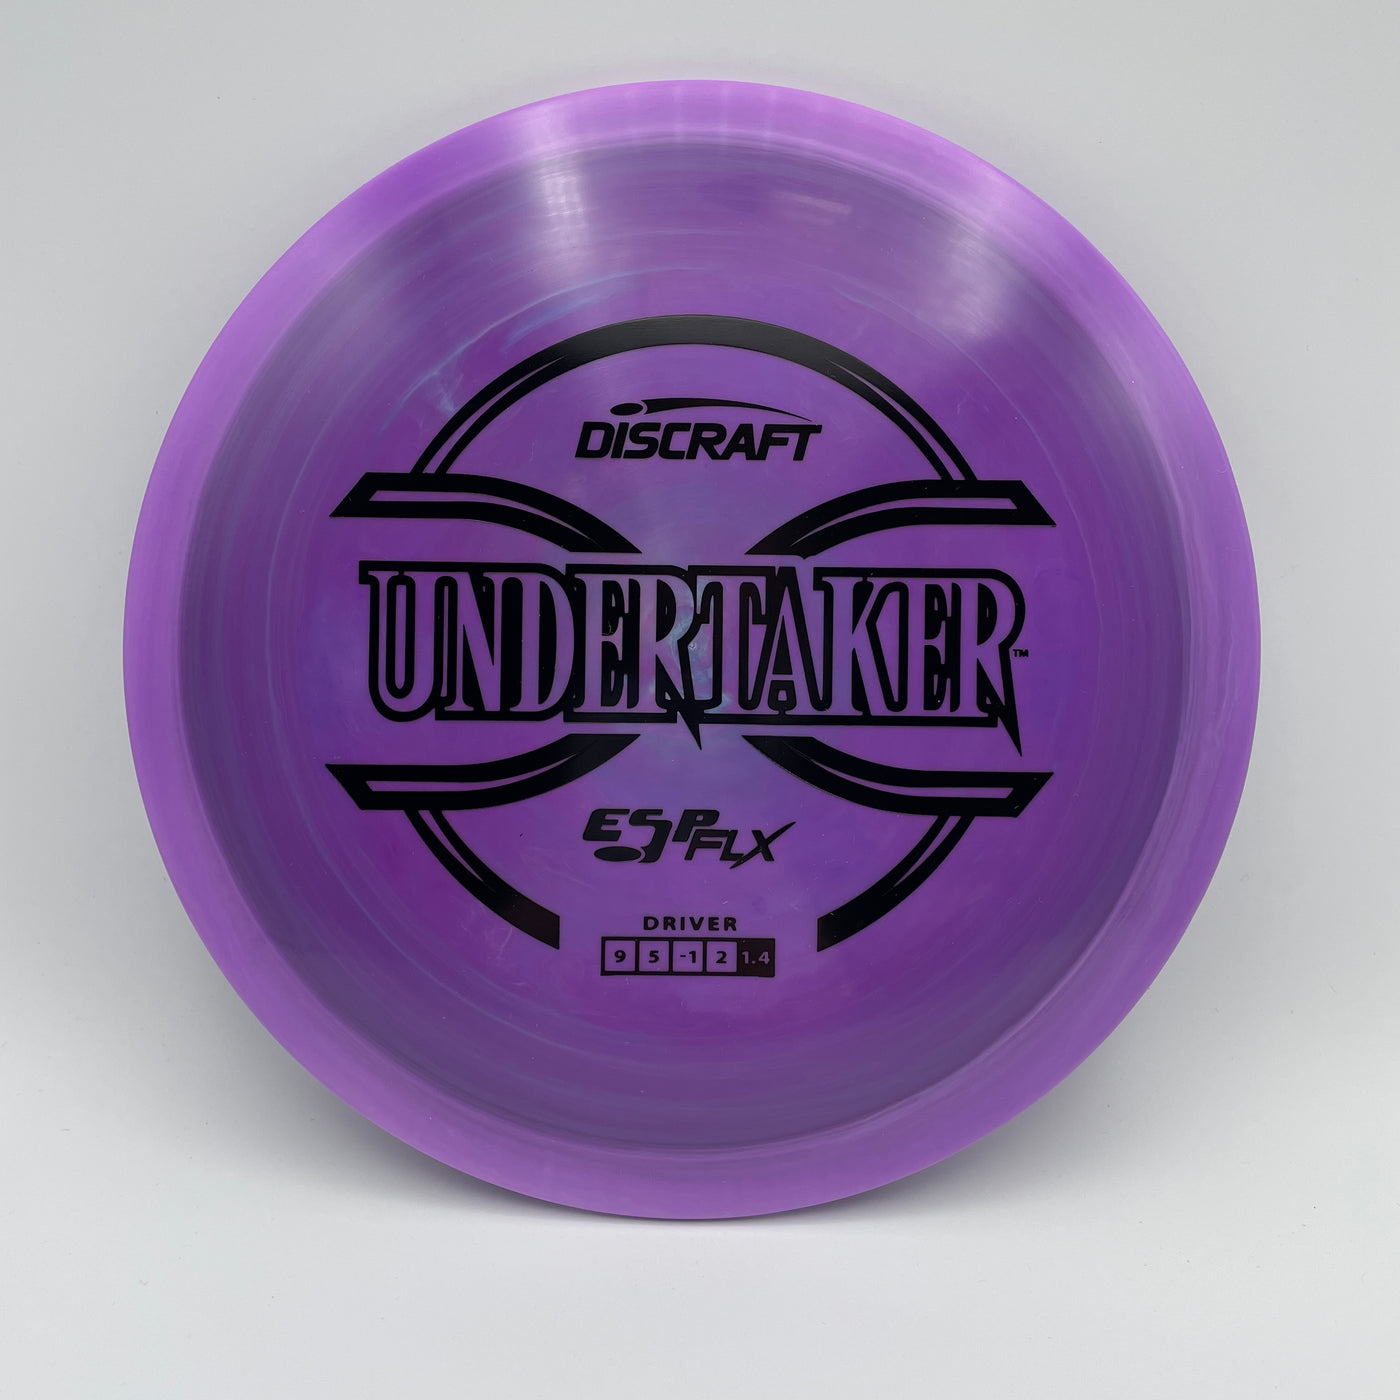 ESP FLX Undertaker